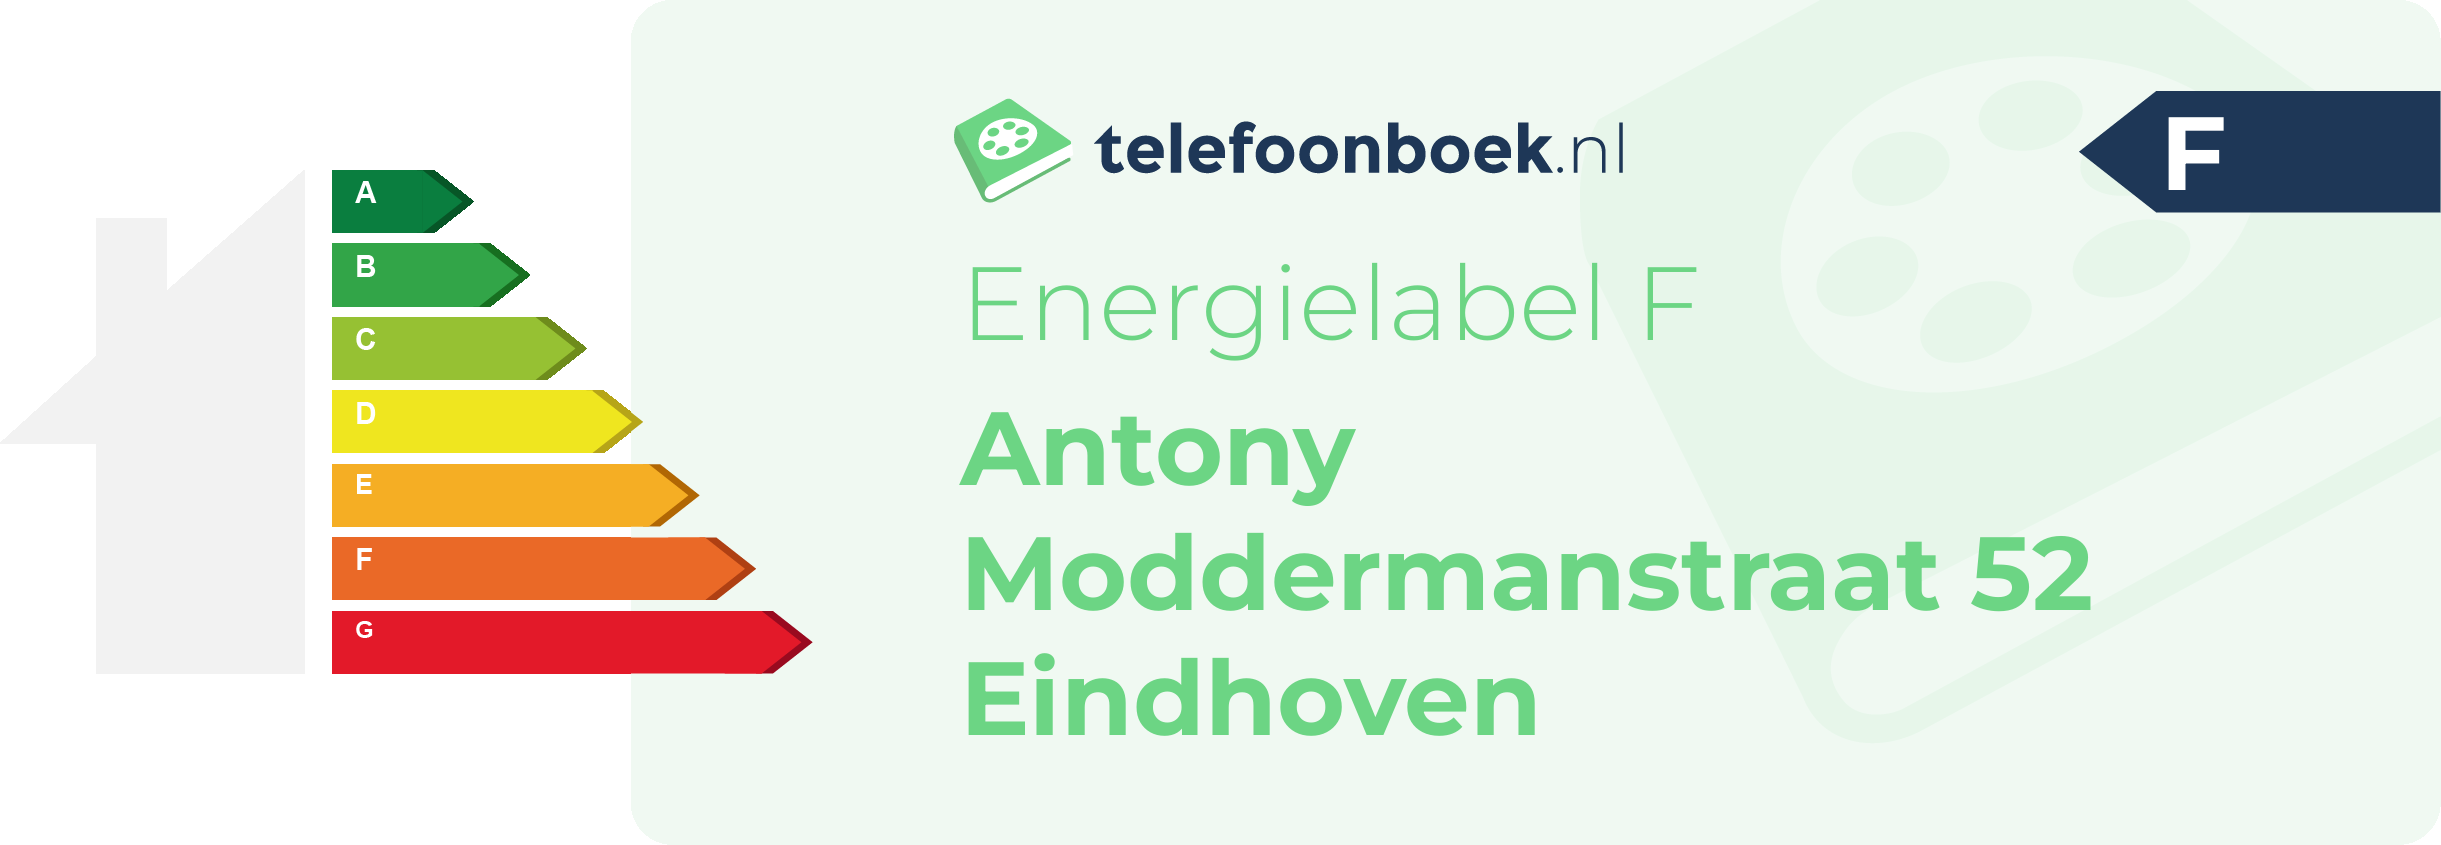 Energielabel Antony Moddermanstraat 52 Eindhoven